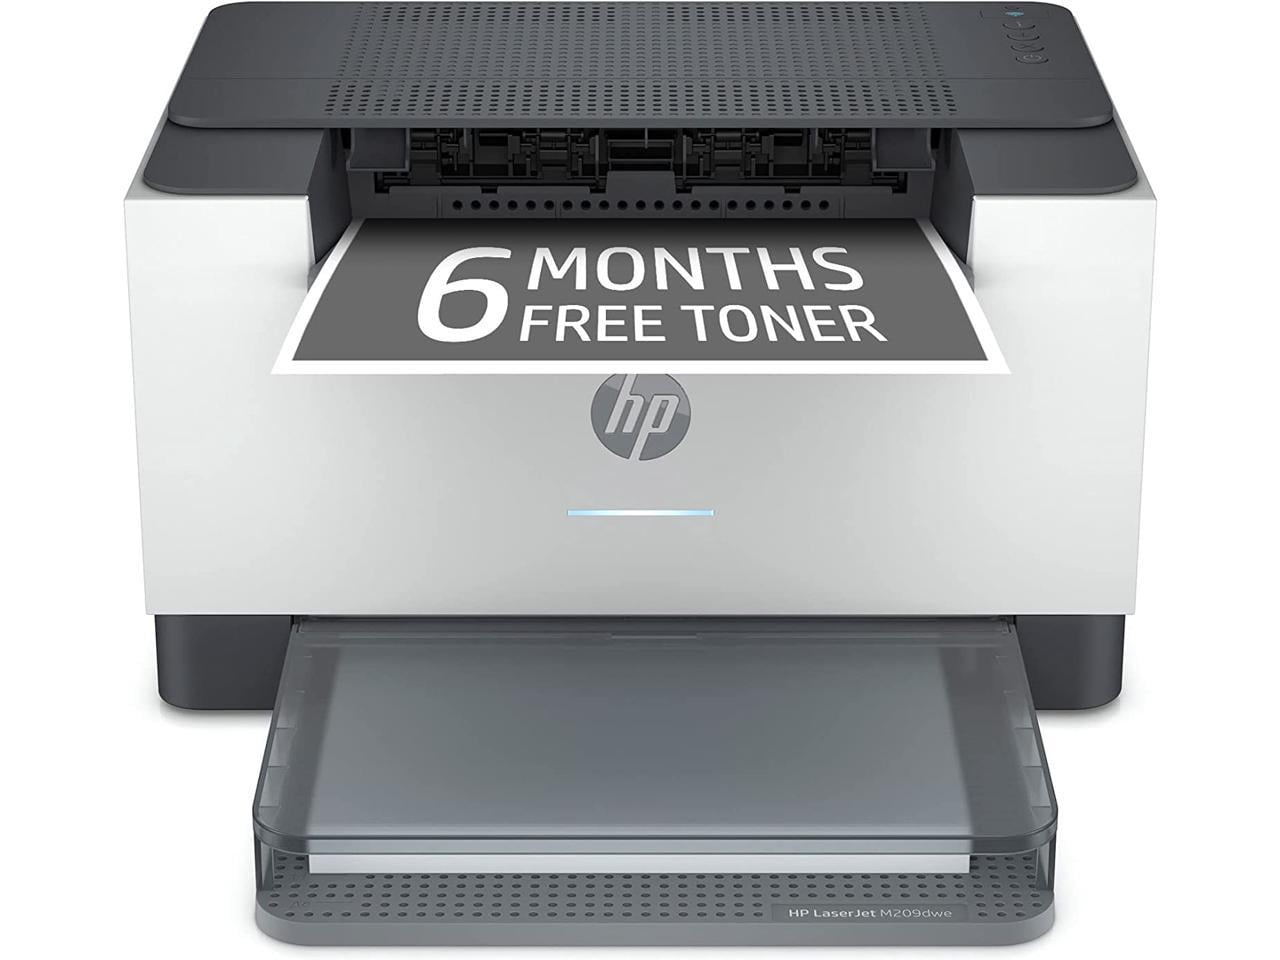 HP - LaserJet Pro M209dwe Wireless Black-and-White Laser with 6 months of Toner HP+ - Walmart.com